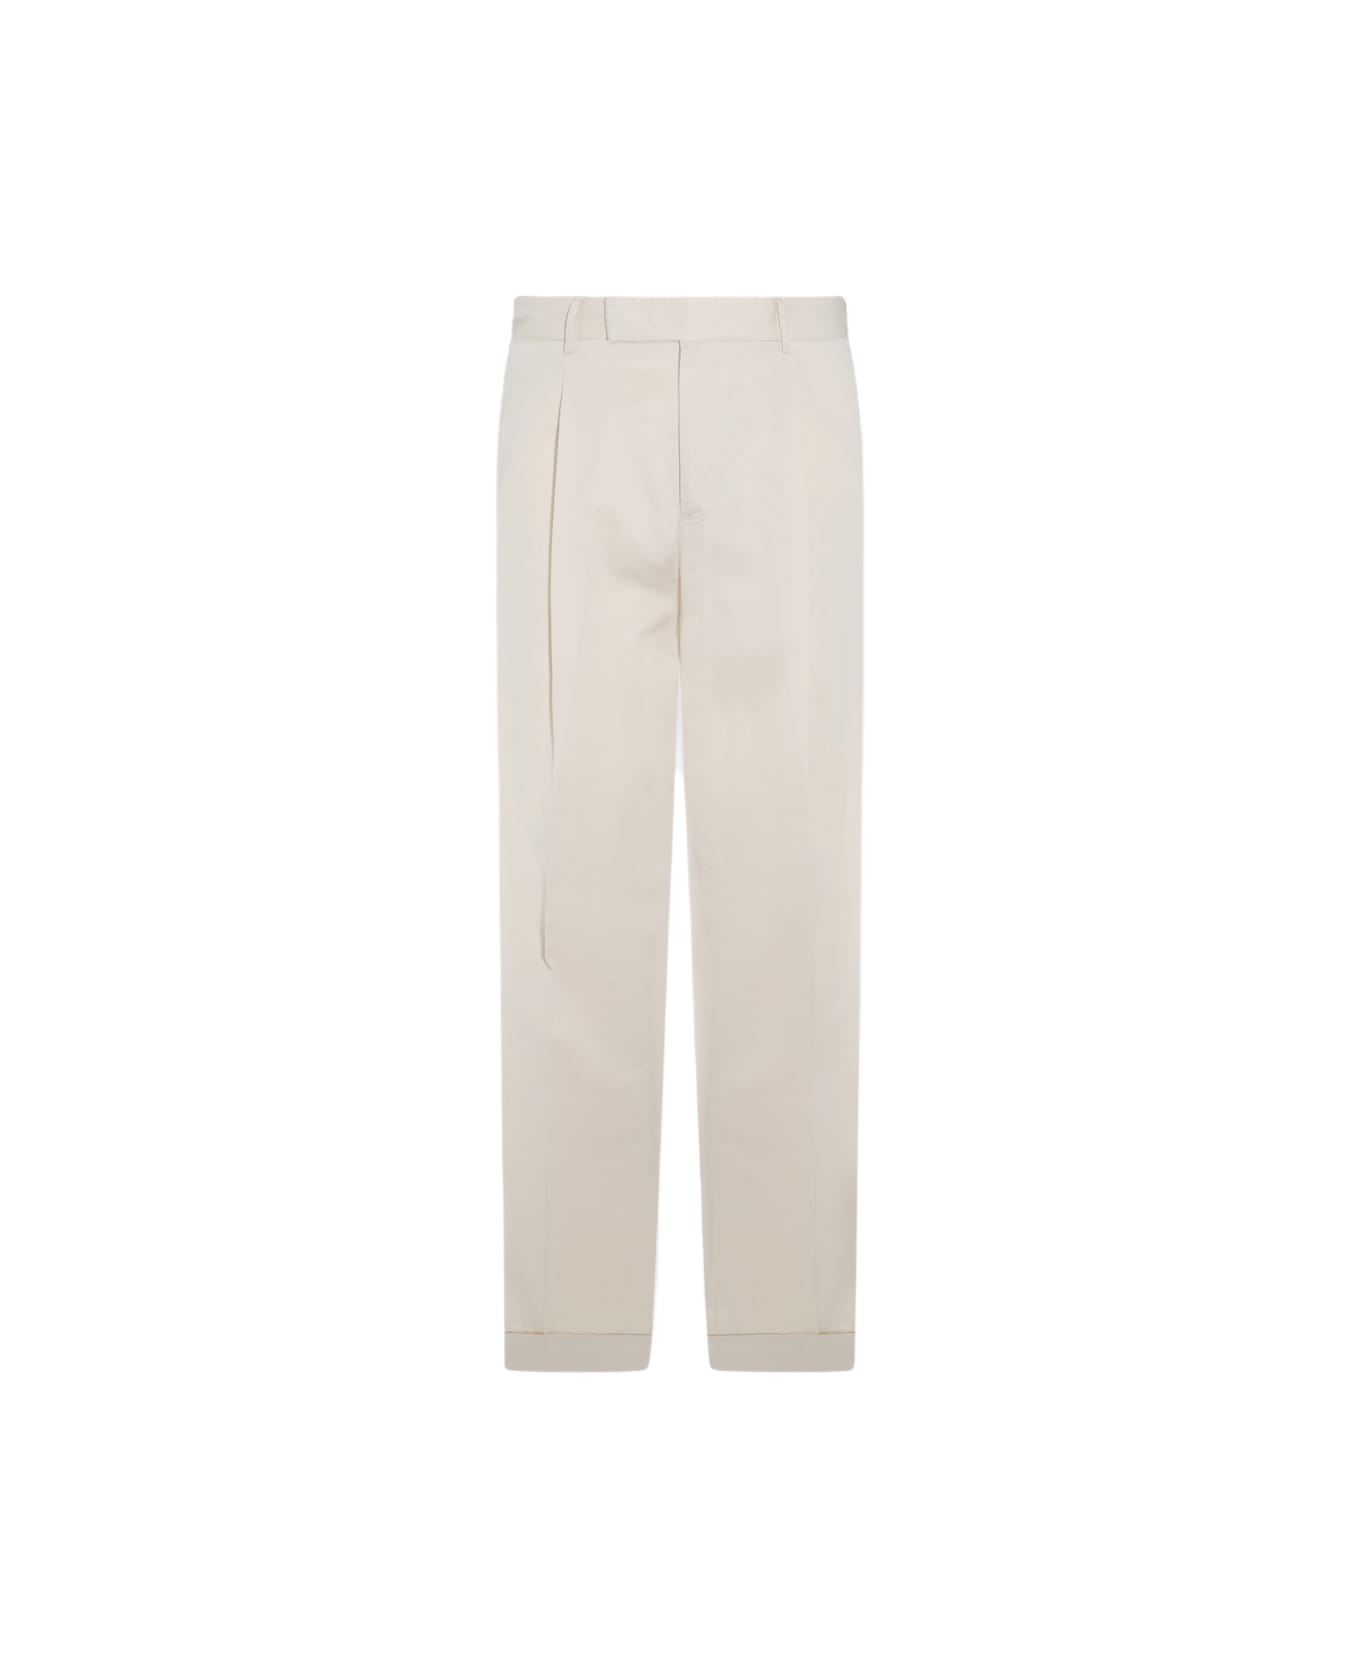 PT Torino White Cotton Pants - Cream